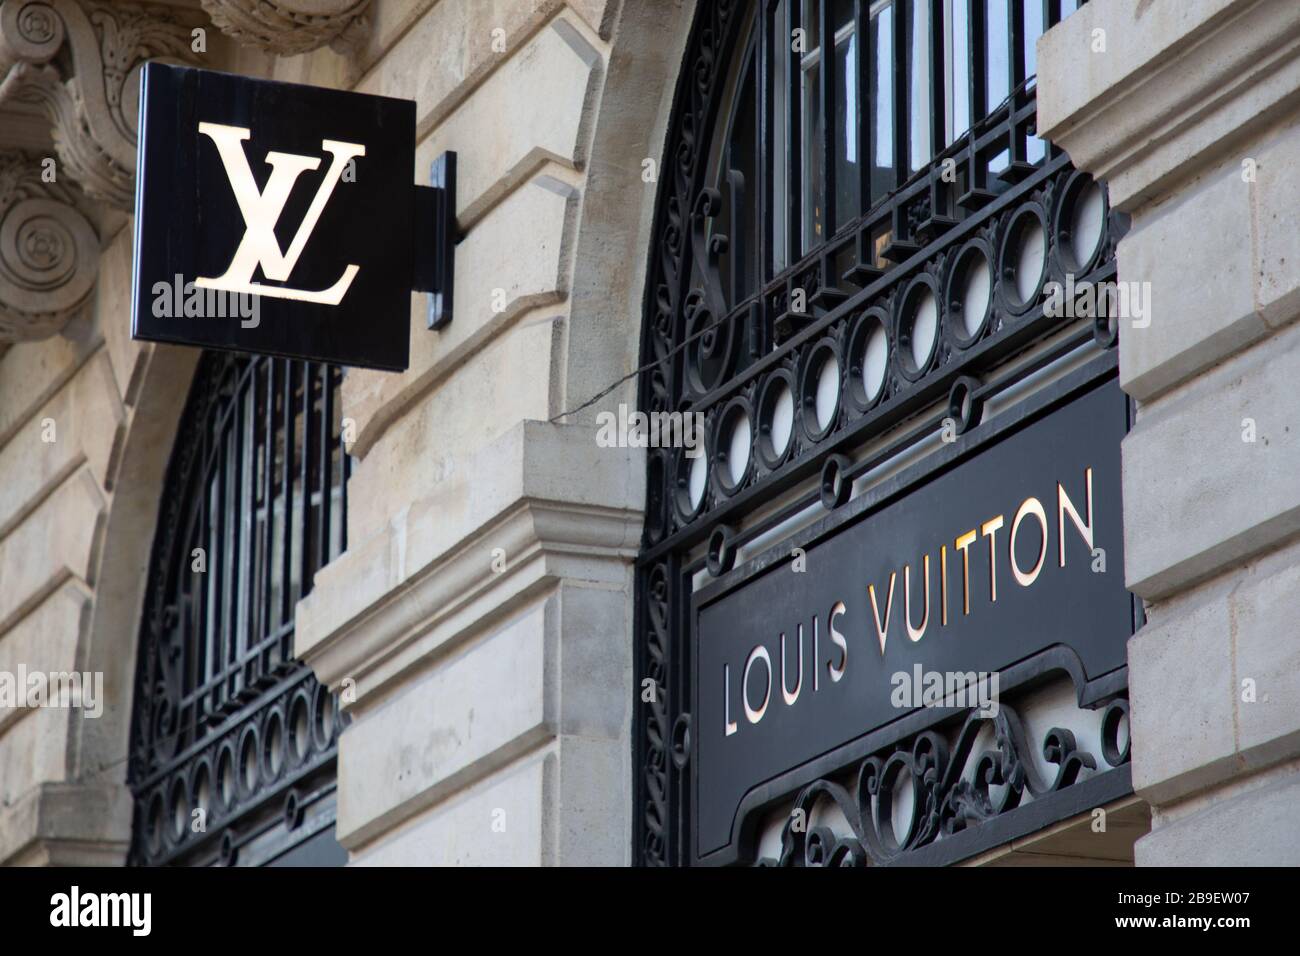 Louis vuitton store logo Stock Vector Images - Alamy